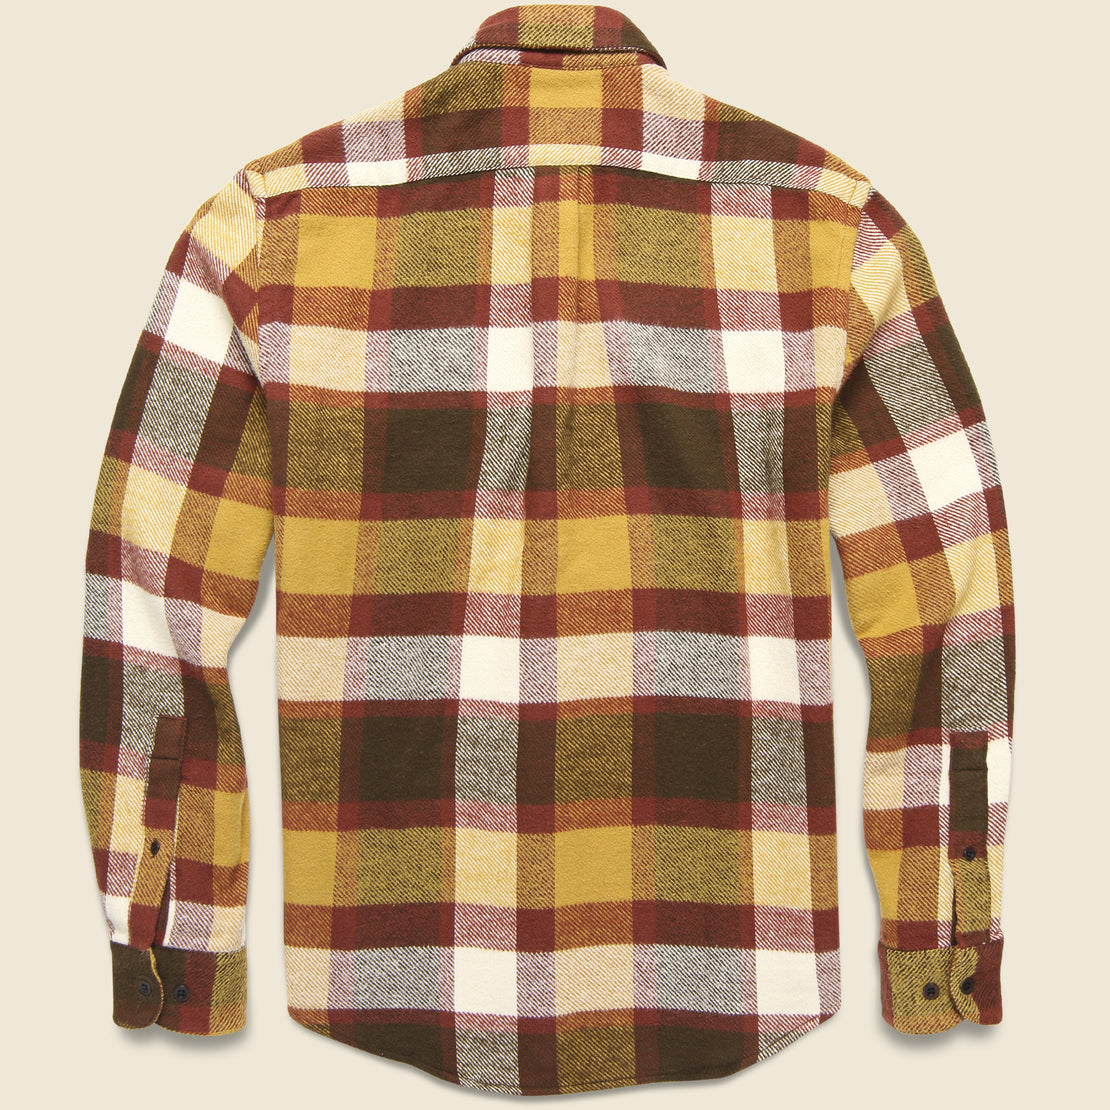 Terracotta Check Shirt - Yellow/Brown/Red